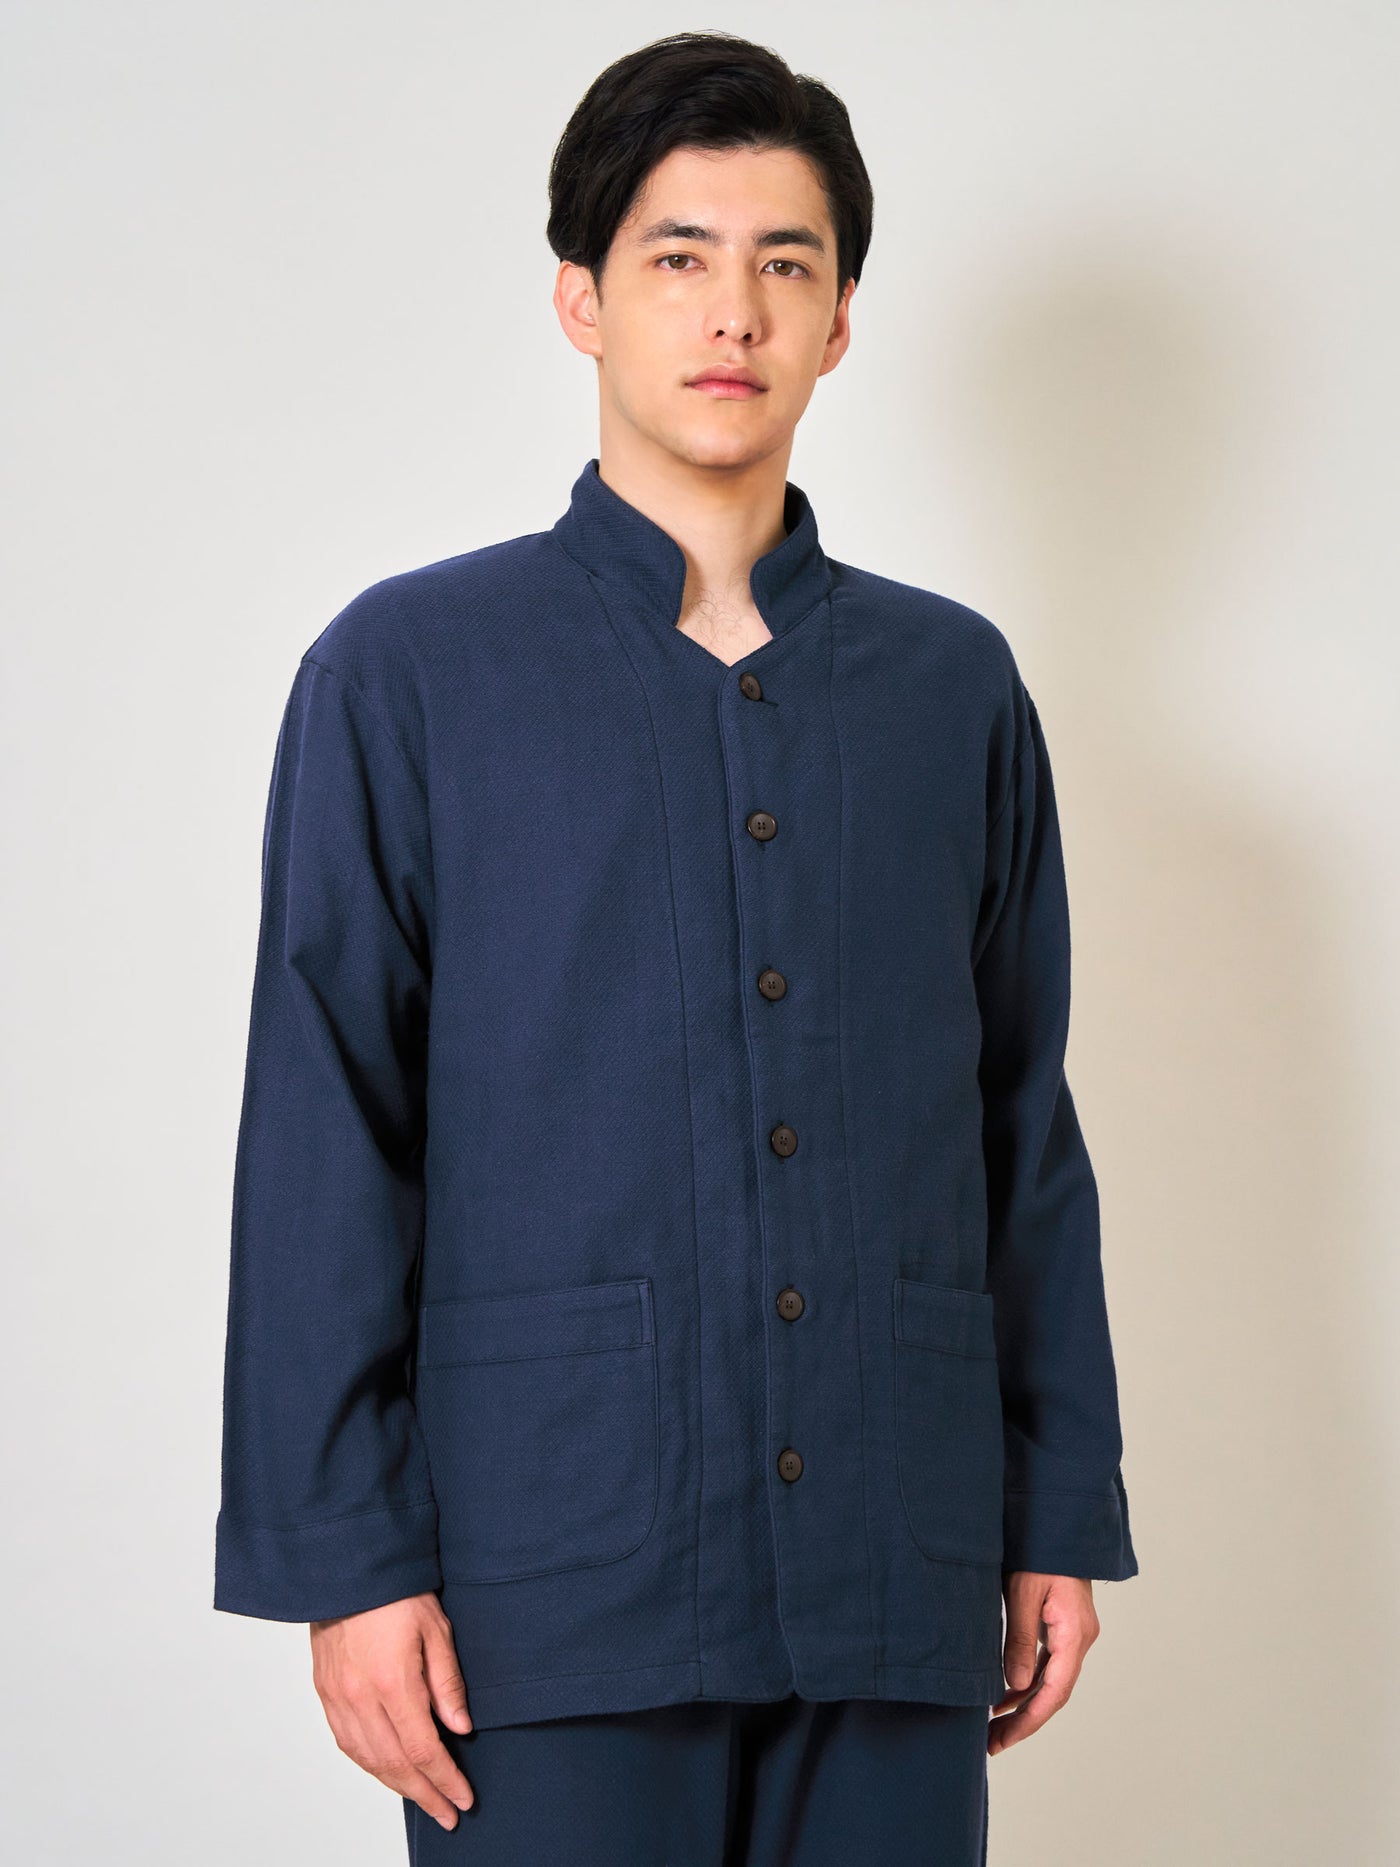 Samue Heritage-Cut Cotton Gauze Pajama Set in Indigo